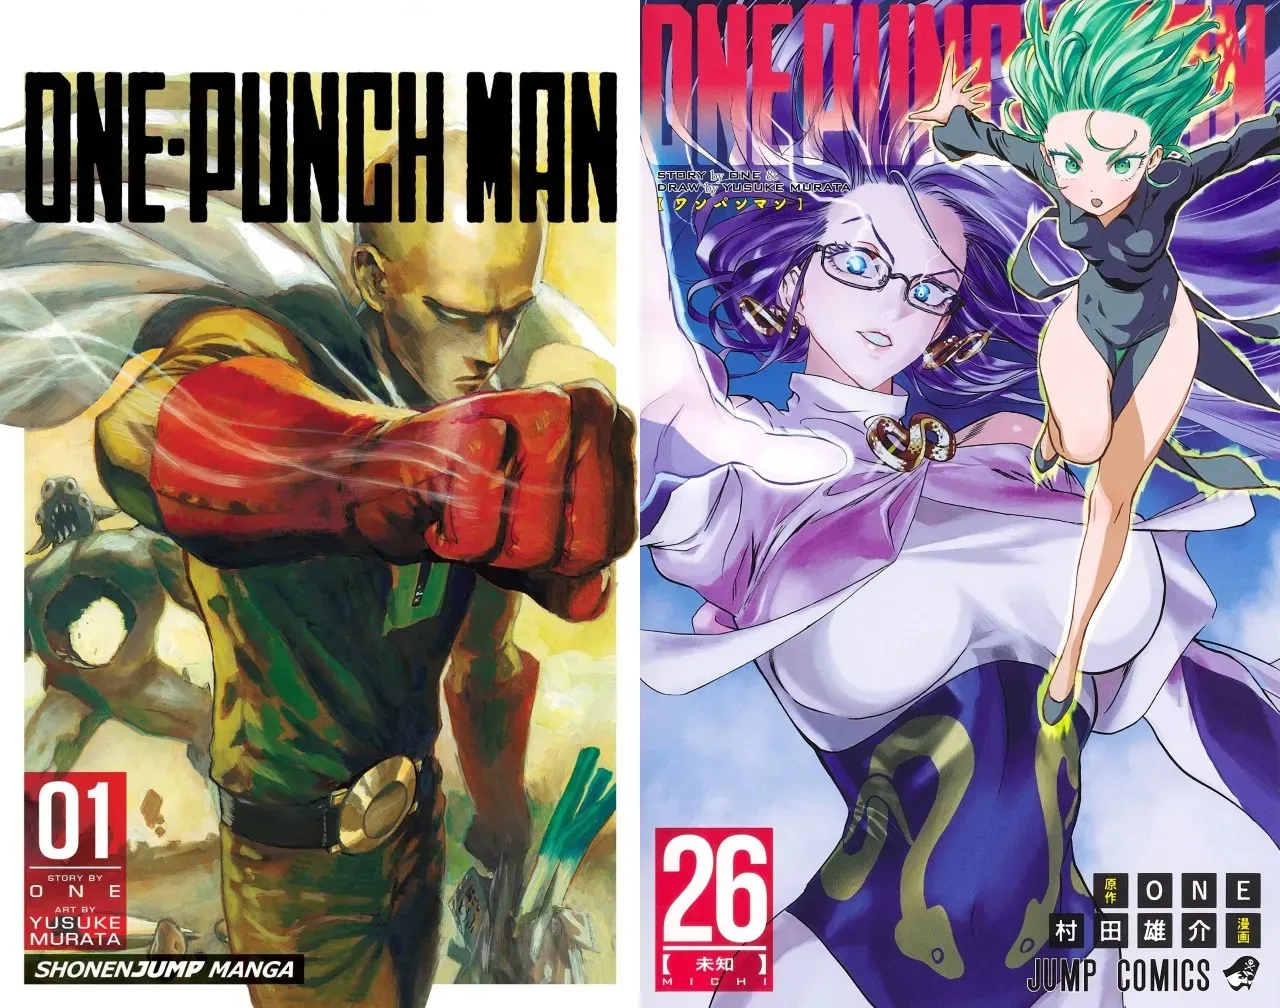 Leer el manga de One Punch Man en línea